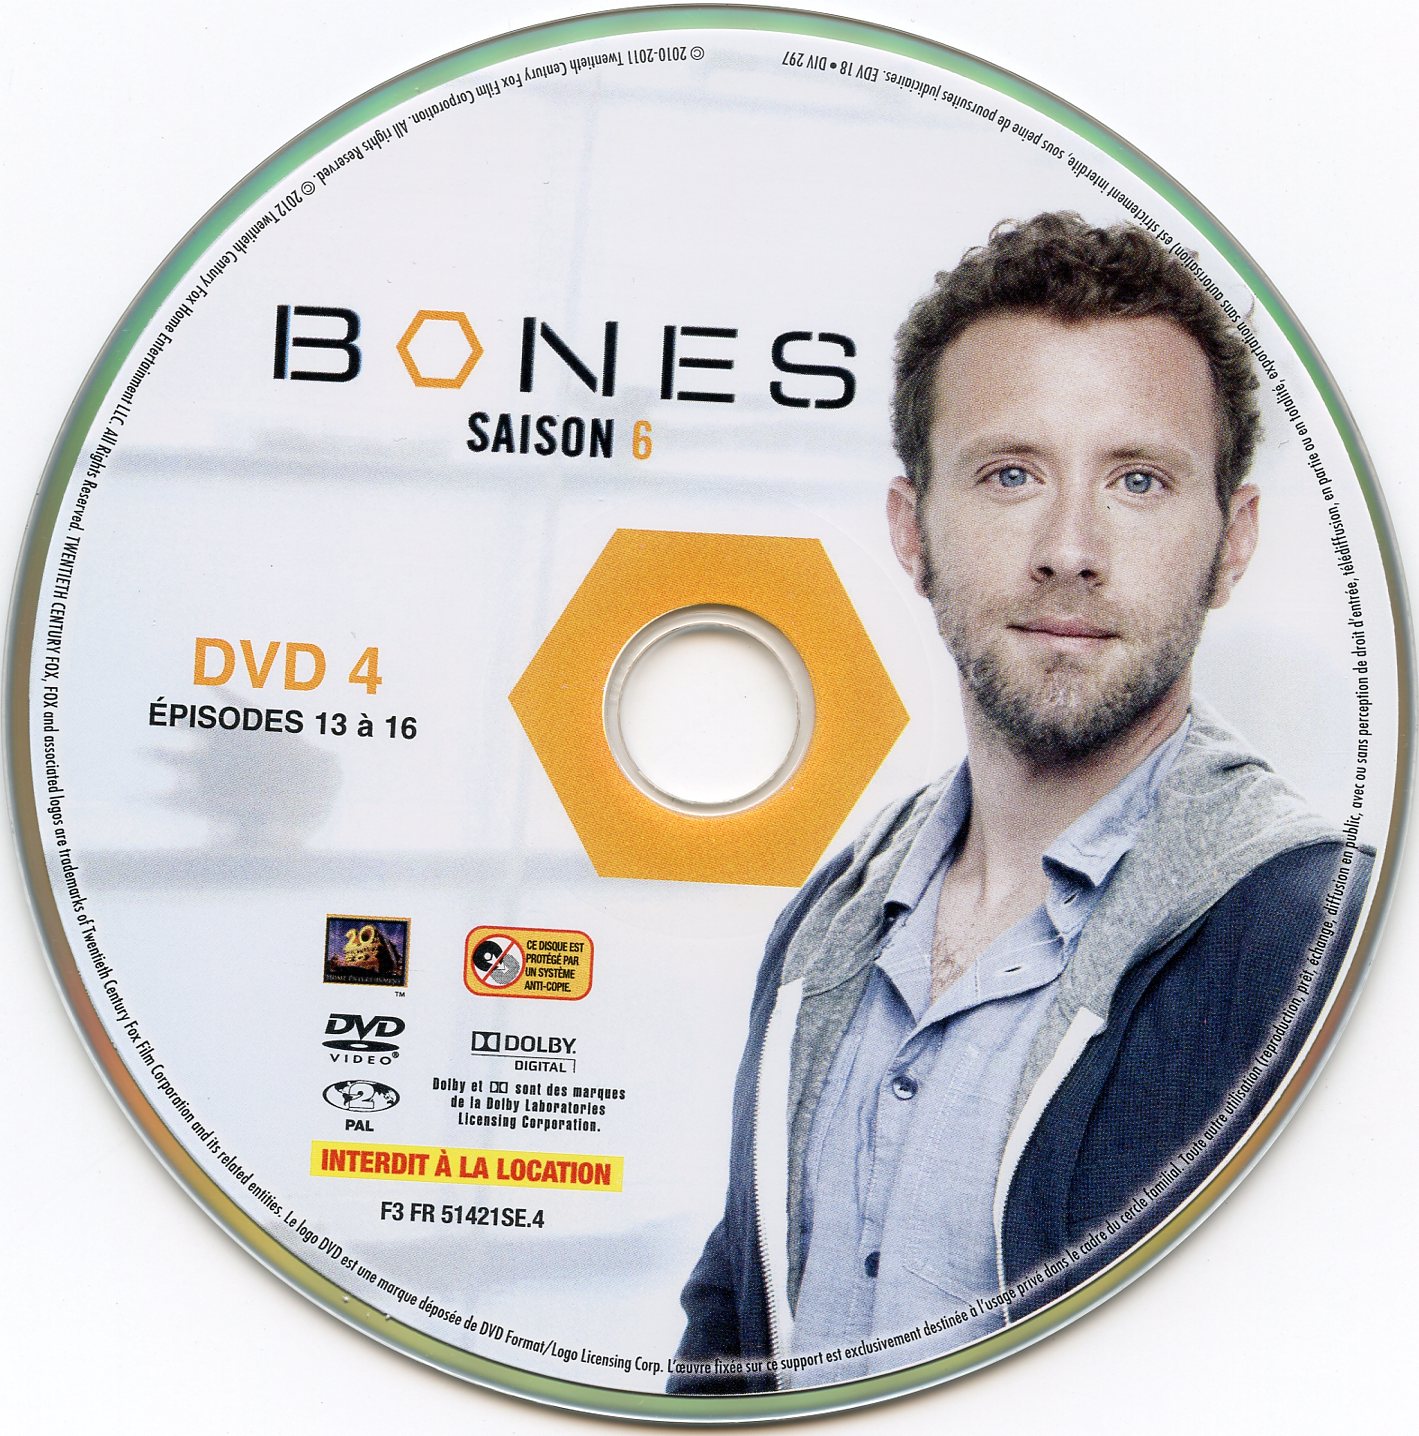 Bones Saison 6 DVD 4